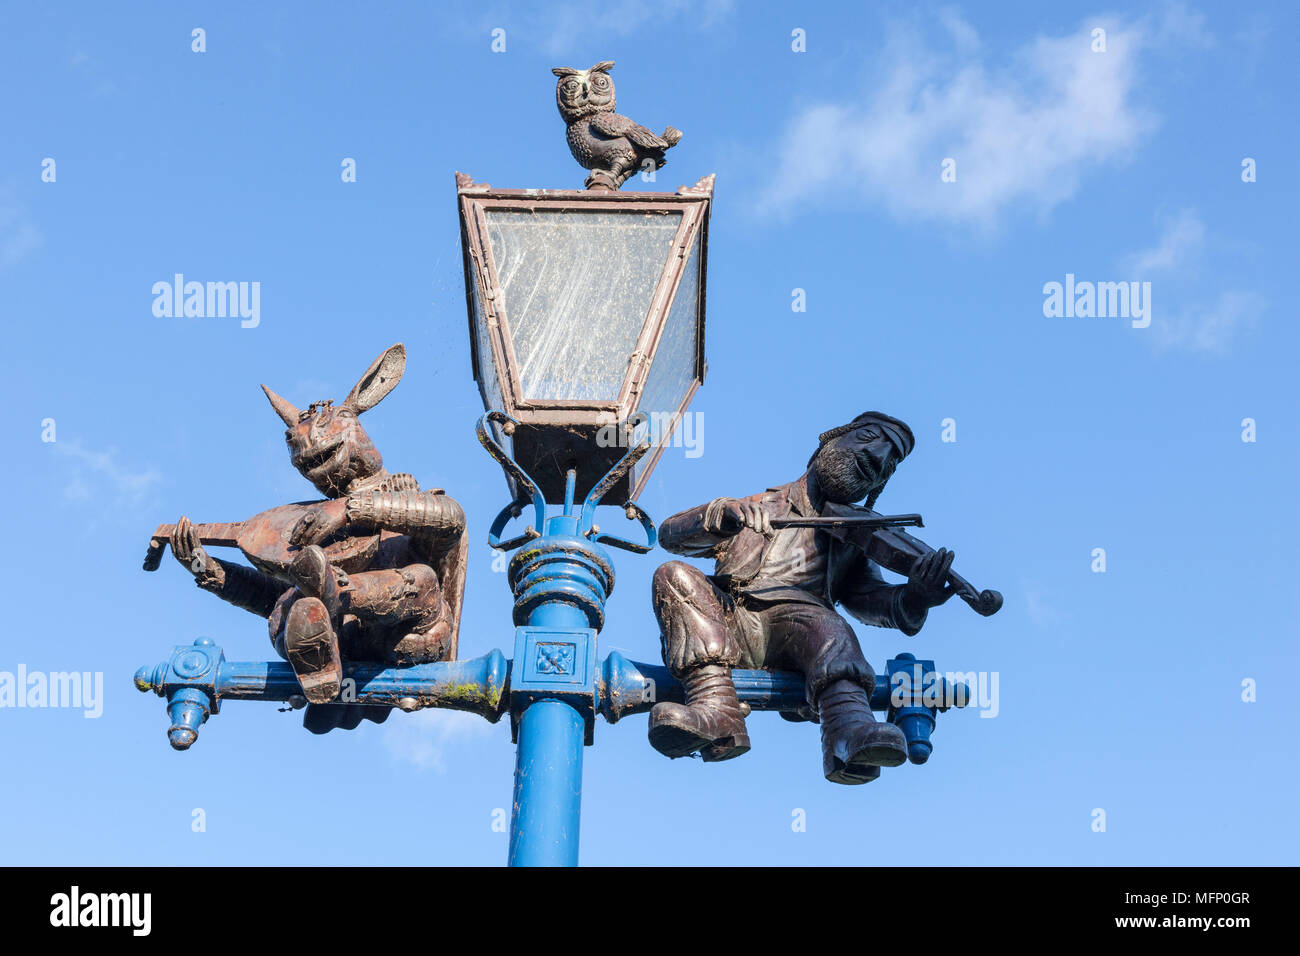 Ornate cast iron lamp post against a blue sky, Stratford upon Avon, Warwickshire, West Midlands, U.K. Stock Photo